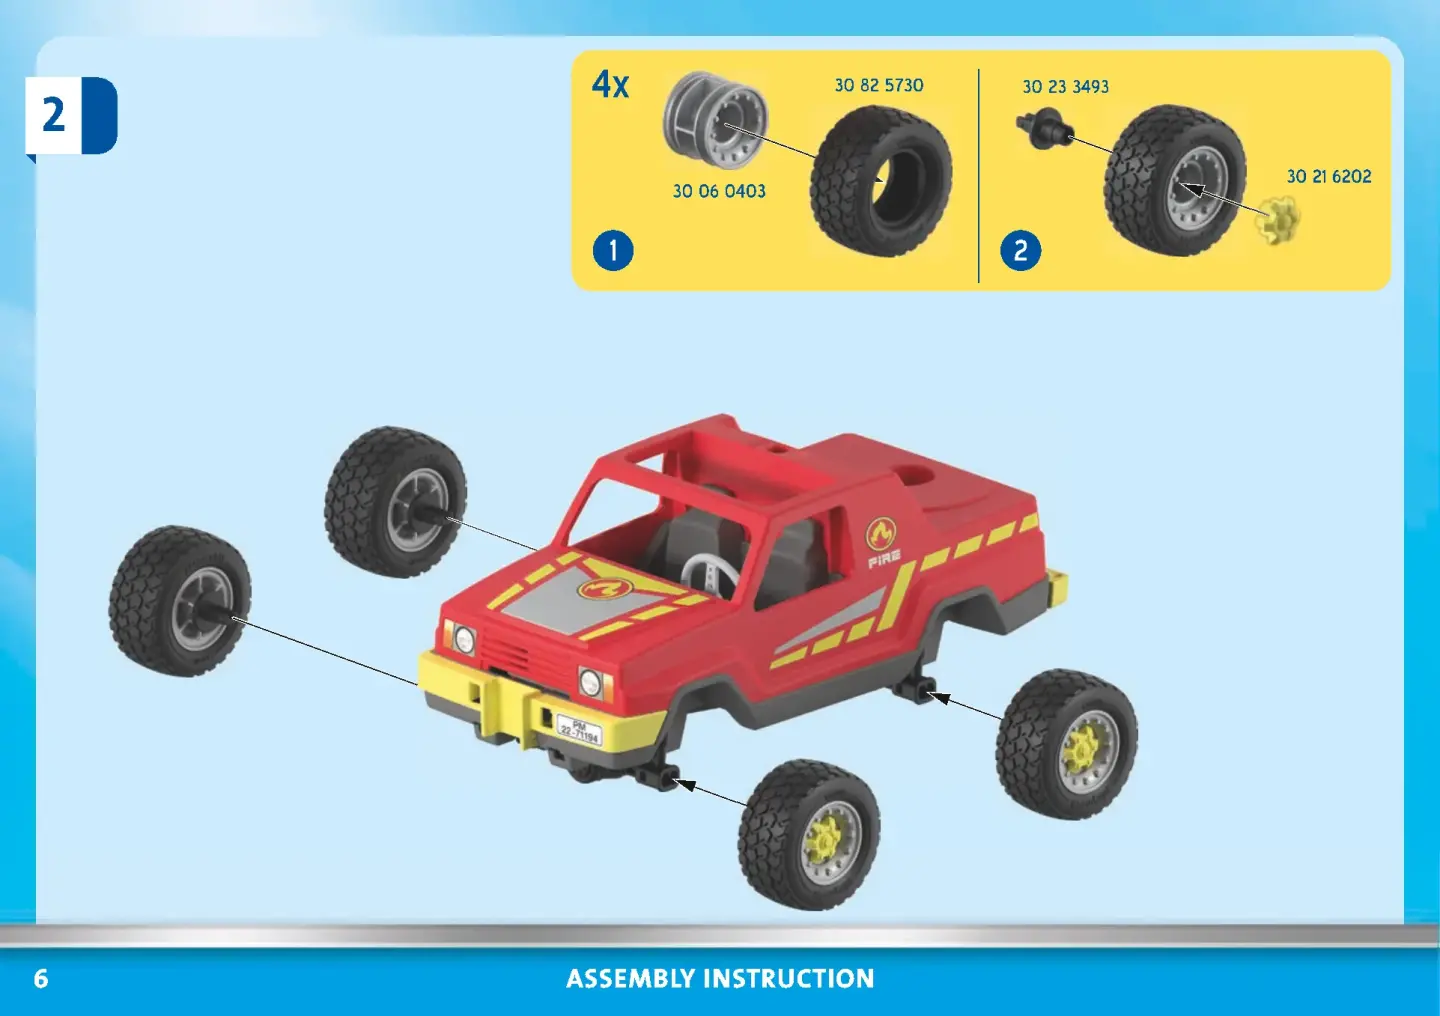 Abapri - Playmobil 71194 - Fire Rescue Truck